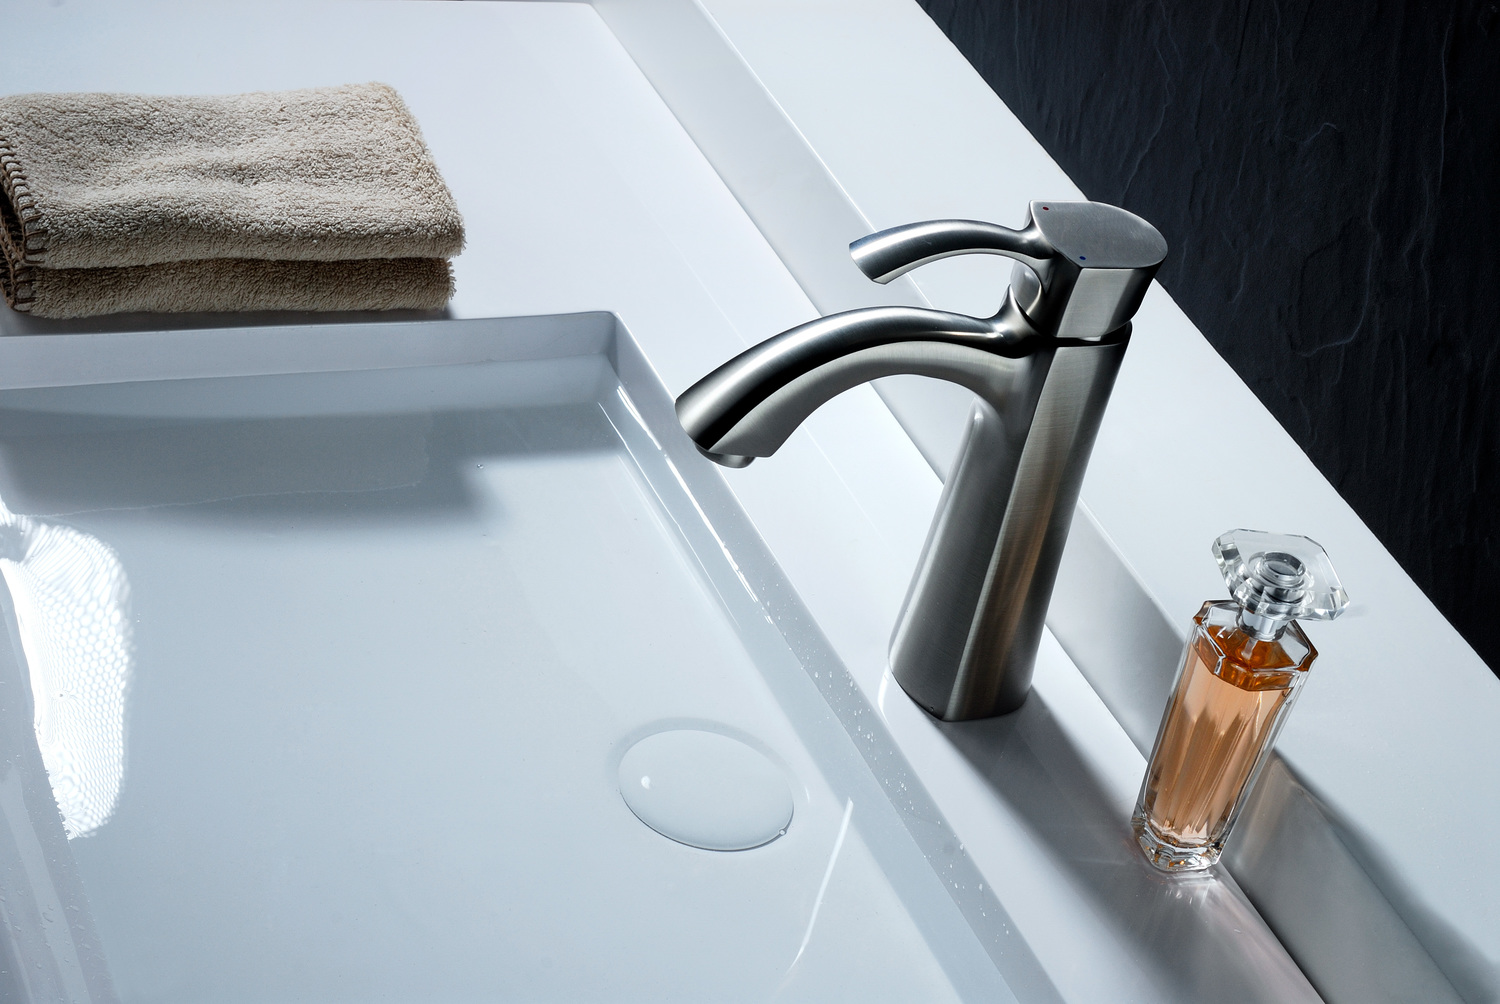 two tap bathroom sink Anzzi BATHROOM - Faucets - Bathroom Sink Faucets - Single Hole Nickel